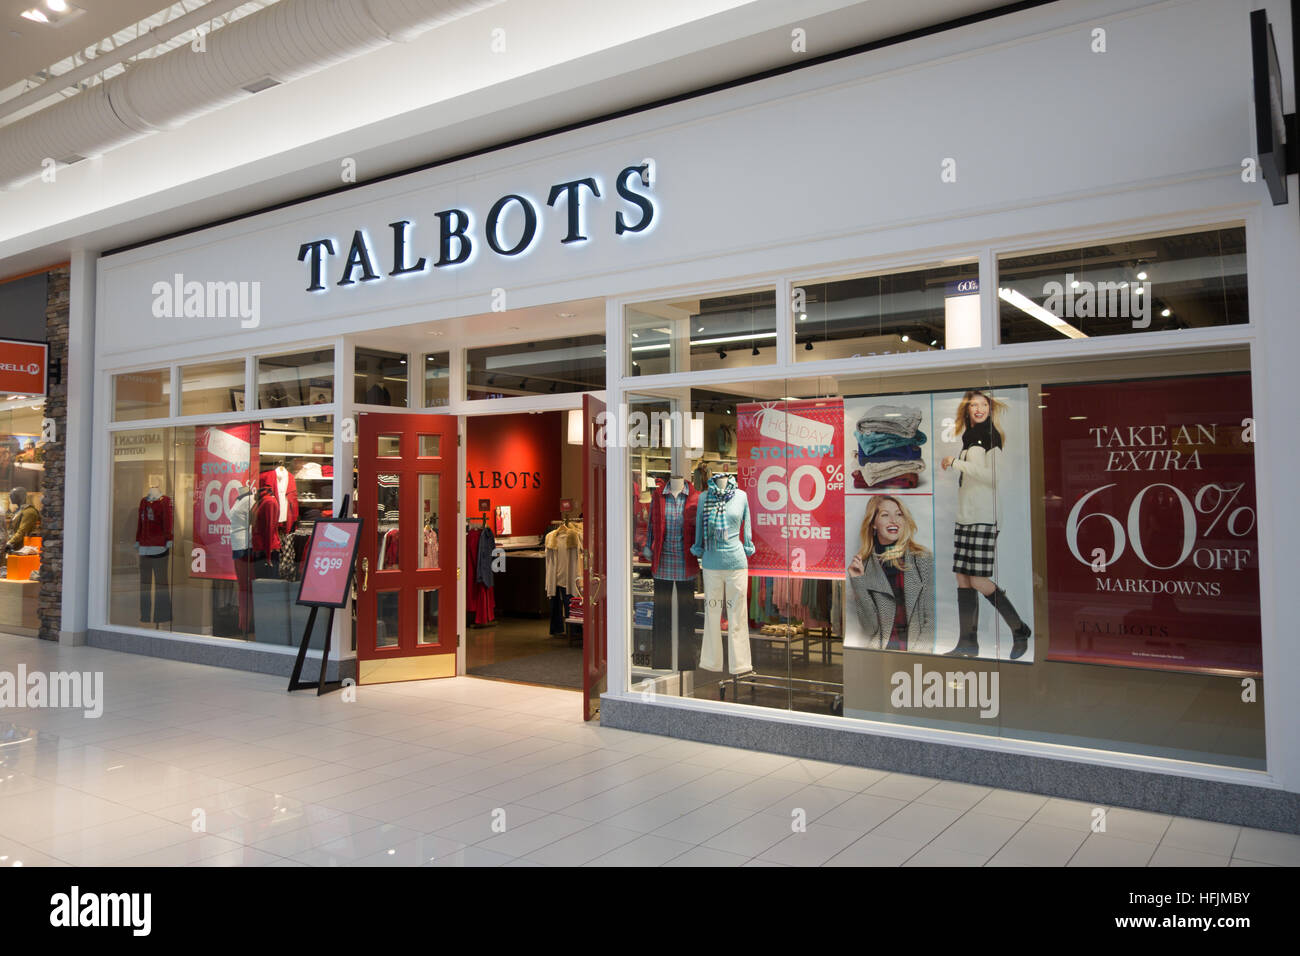 talbots store Stock Photo - Alamy